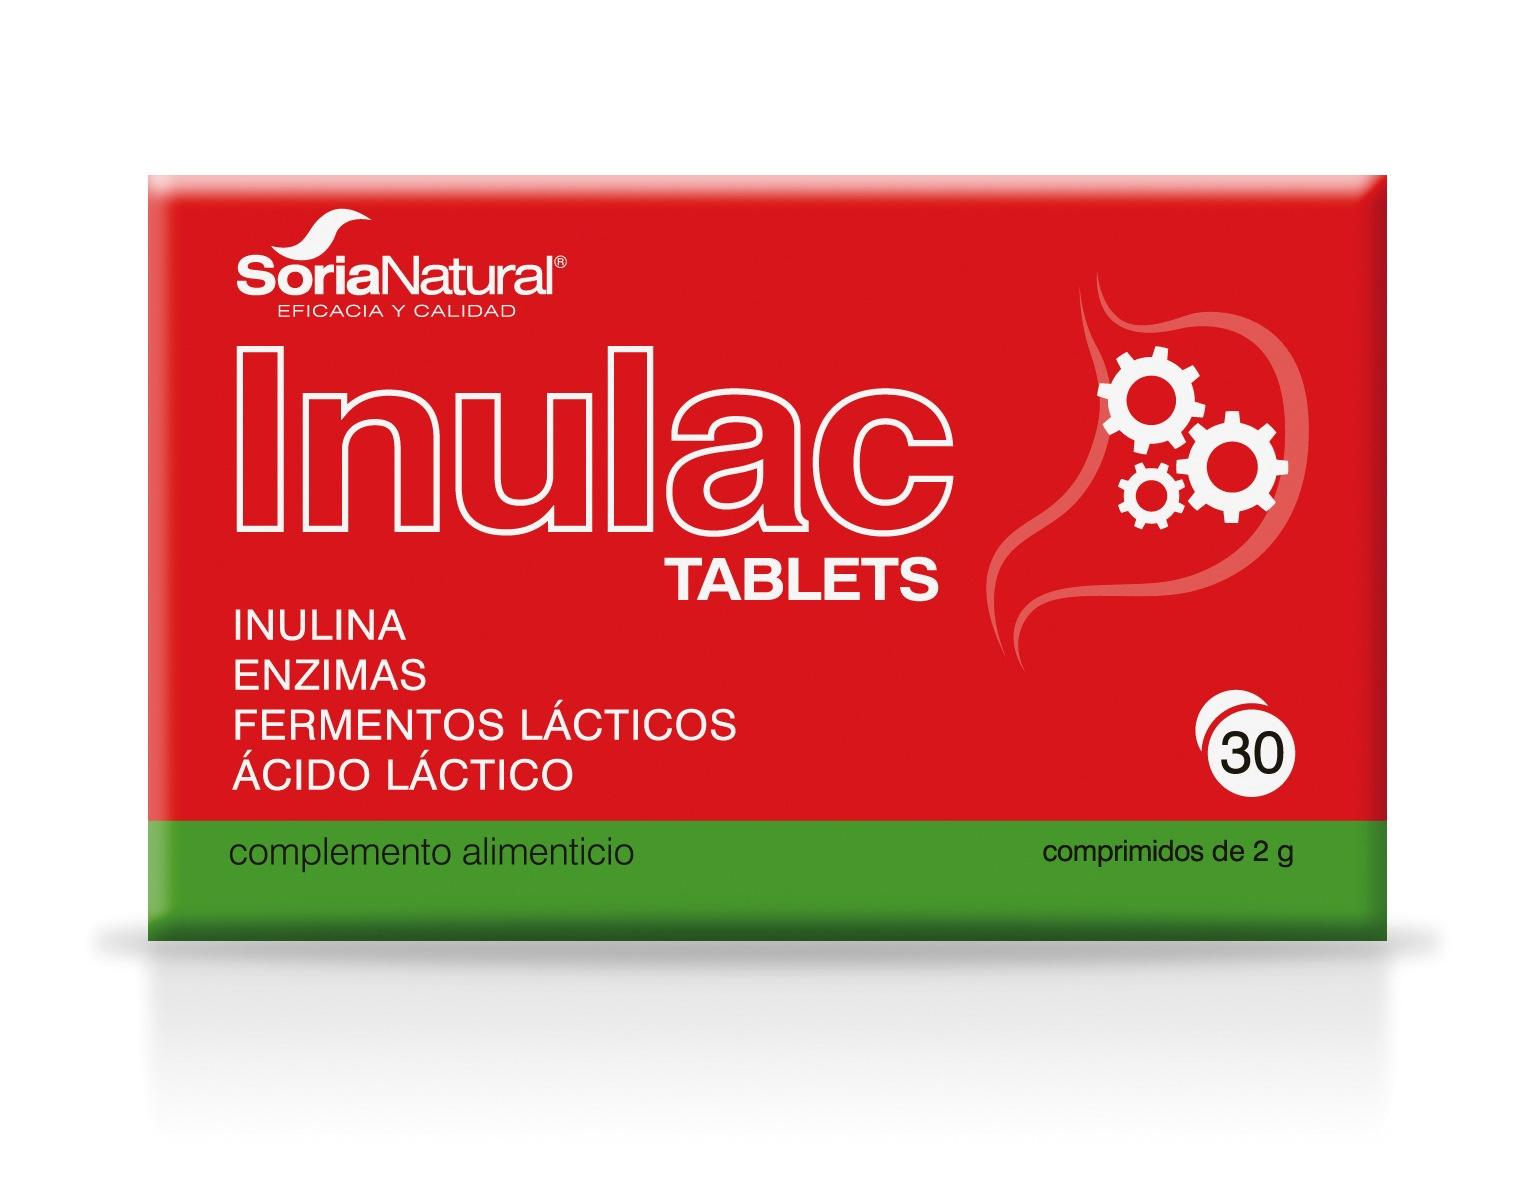 comprimidos-inulac-tablets-soria-natural-2.jpg